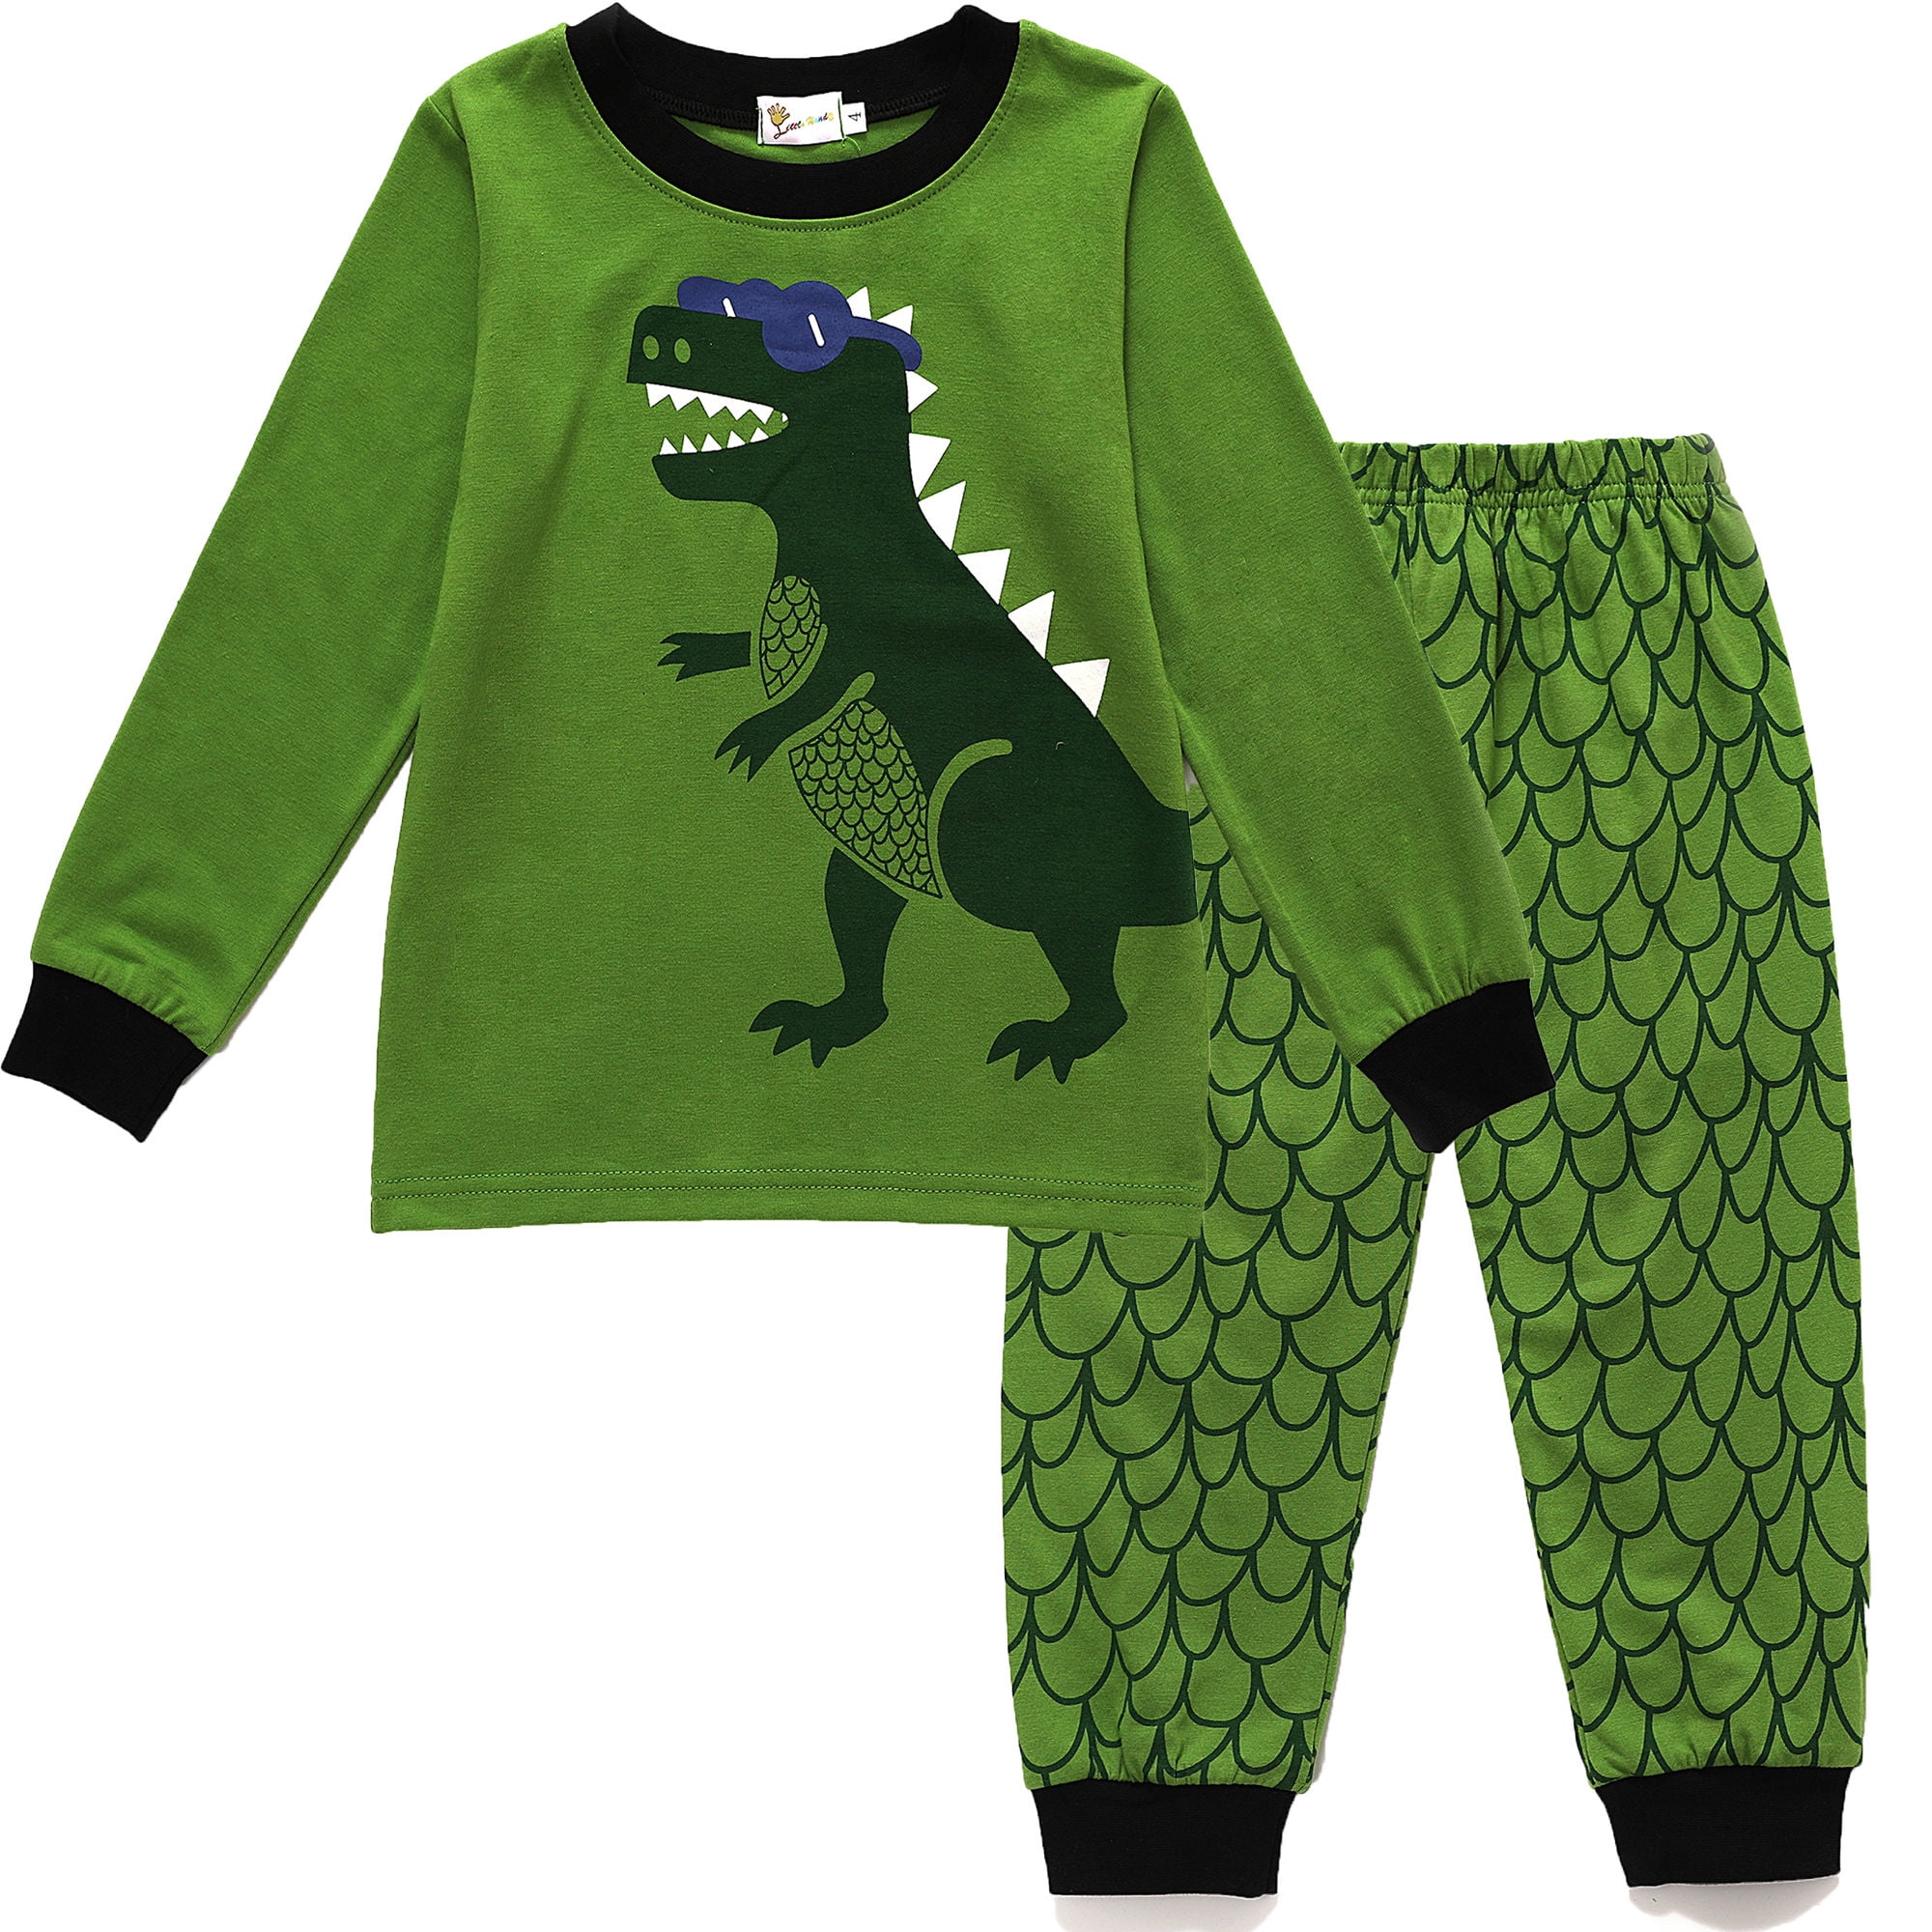 Toddler Boys Long Sleeve Rocket Dinosaur Pajamas Sets Pjs Cotton Sleepwear Infant Kids